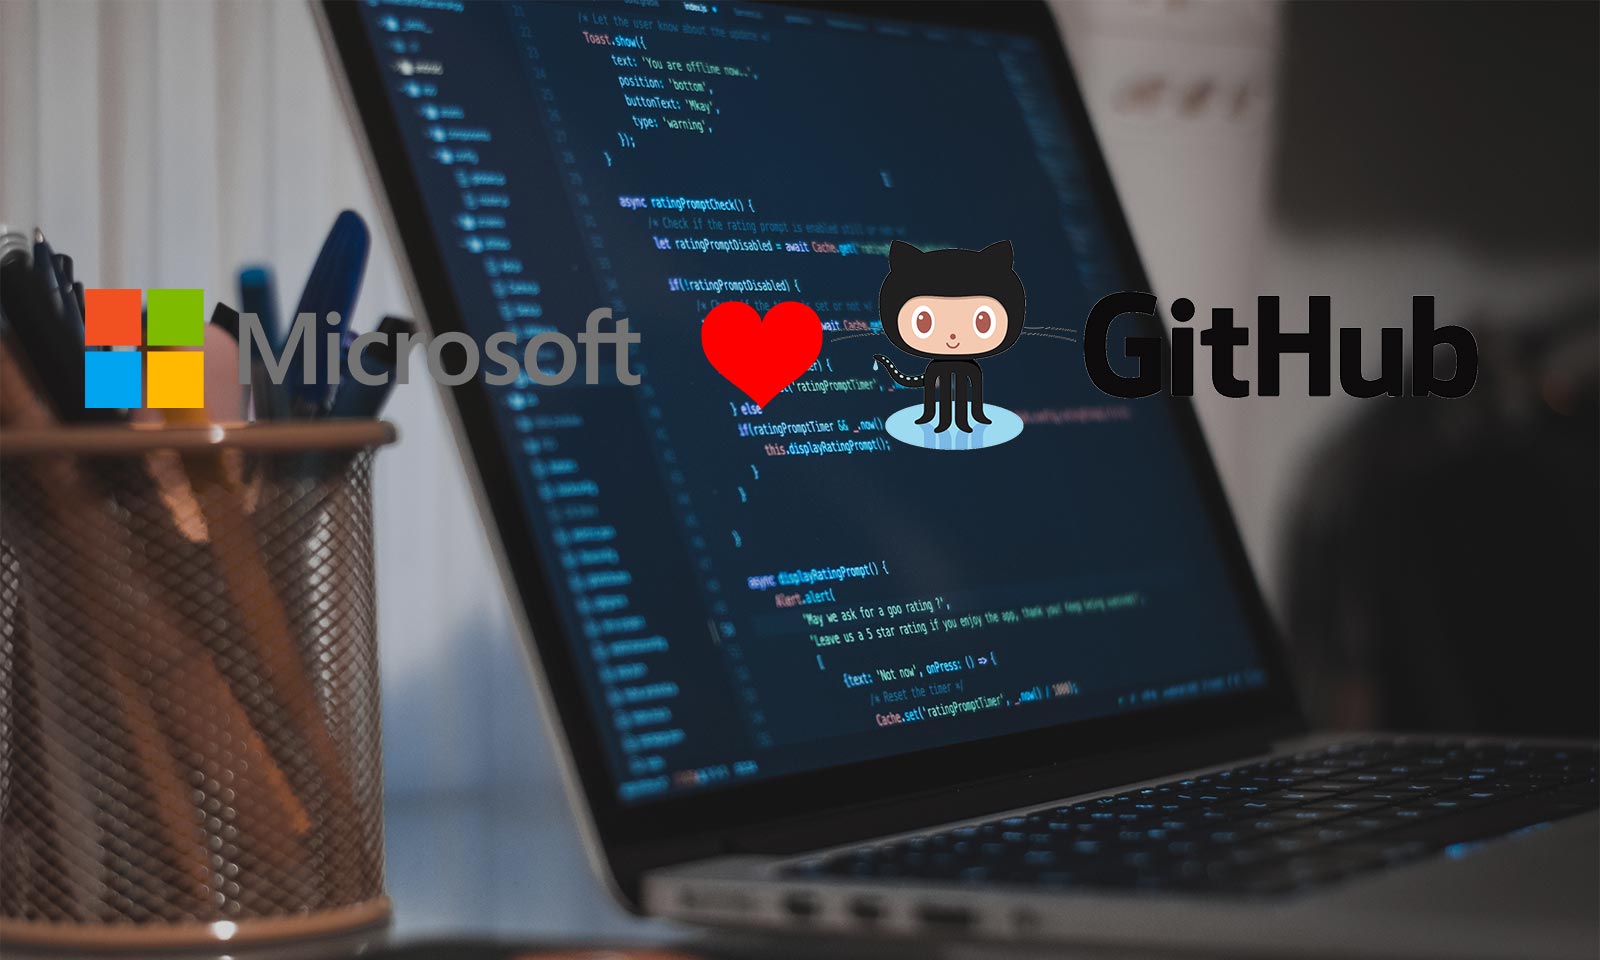 Microsoft acquires GitHub for $7.5 billion